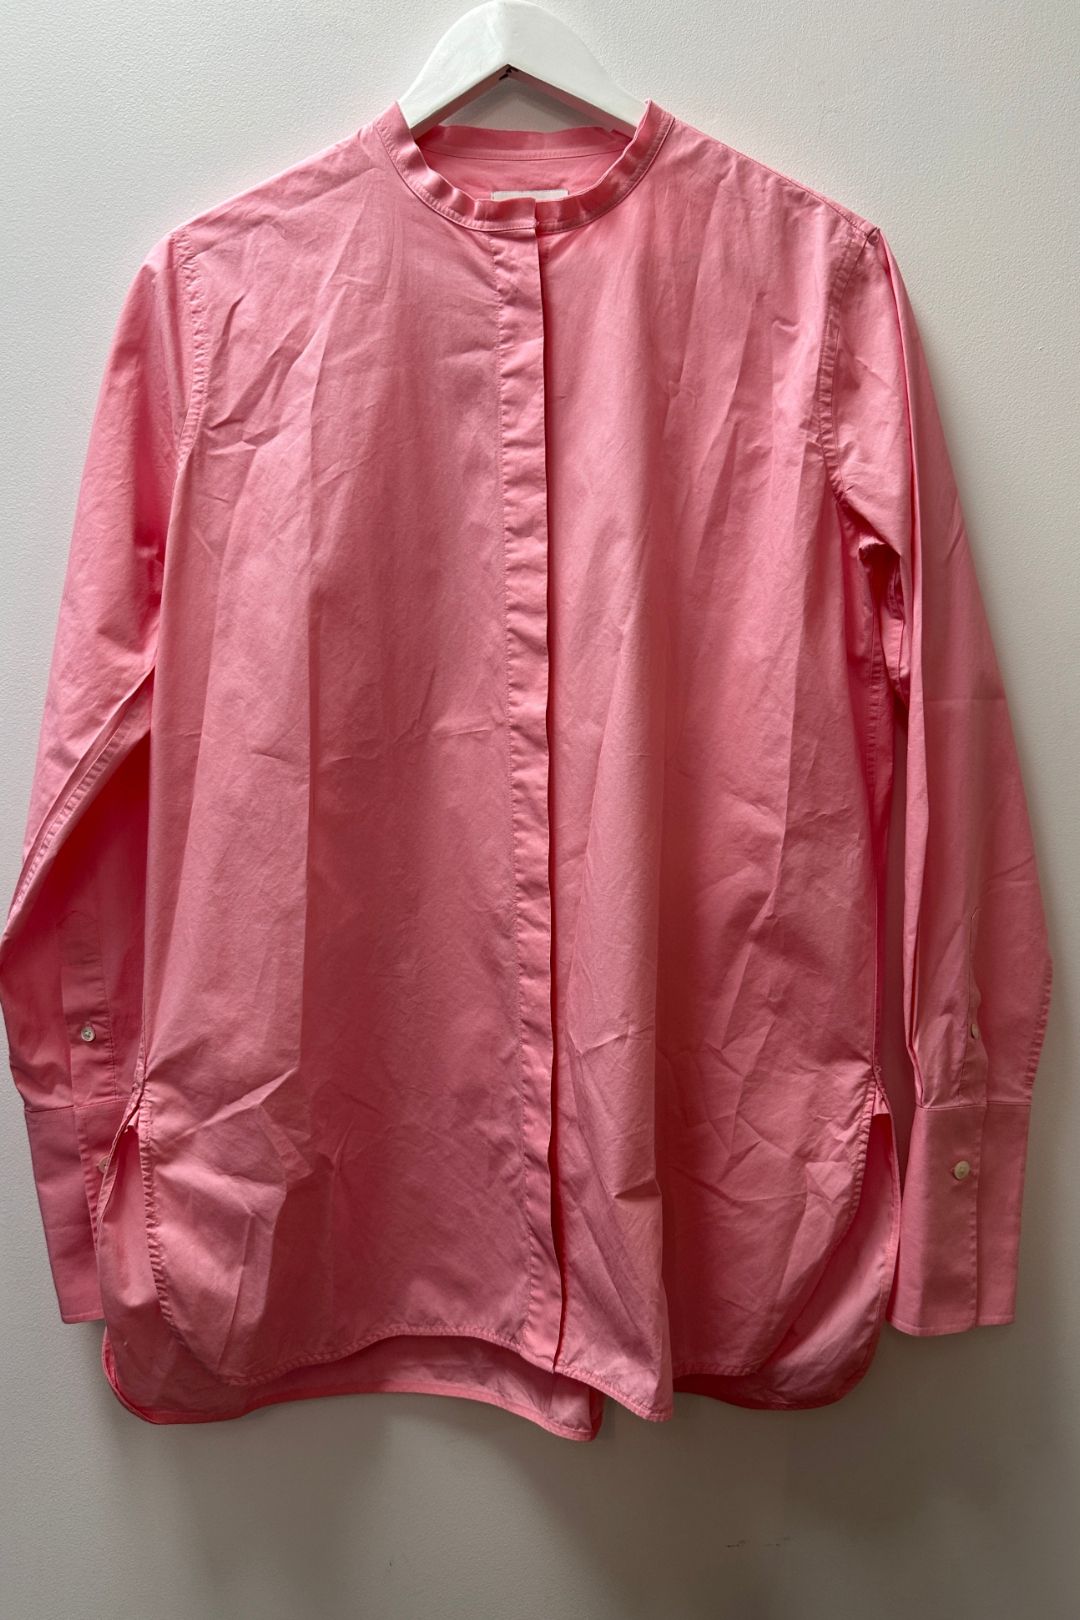 Scanlan Theodore Pink Cotton Long Sleeve Shirt